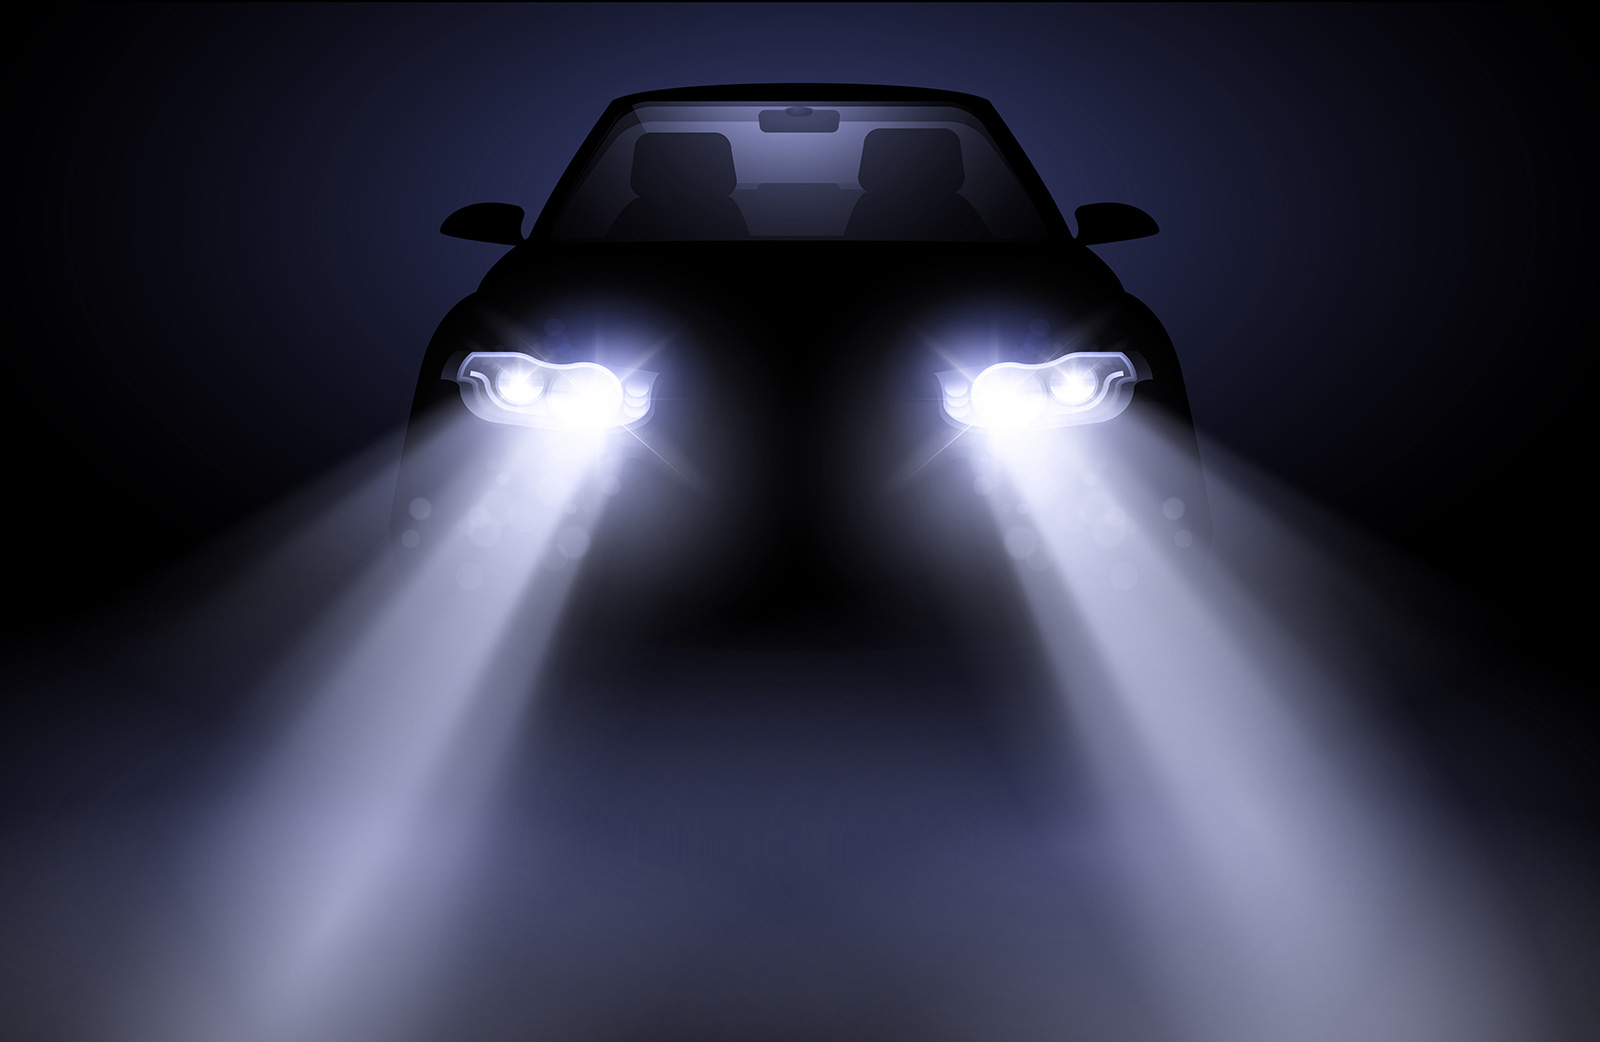 https://bgr.com/wp-content/uploads/2021/08/car-led-headlights.jpg?quality=82&strip=all